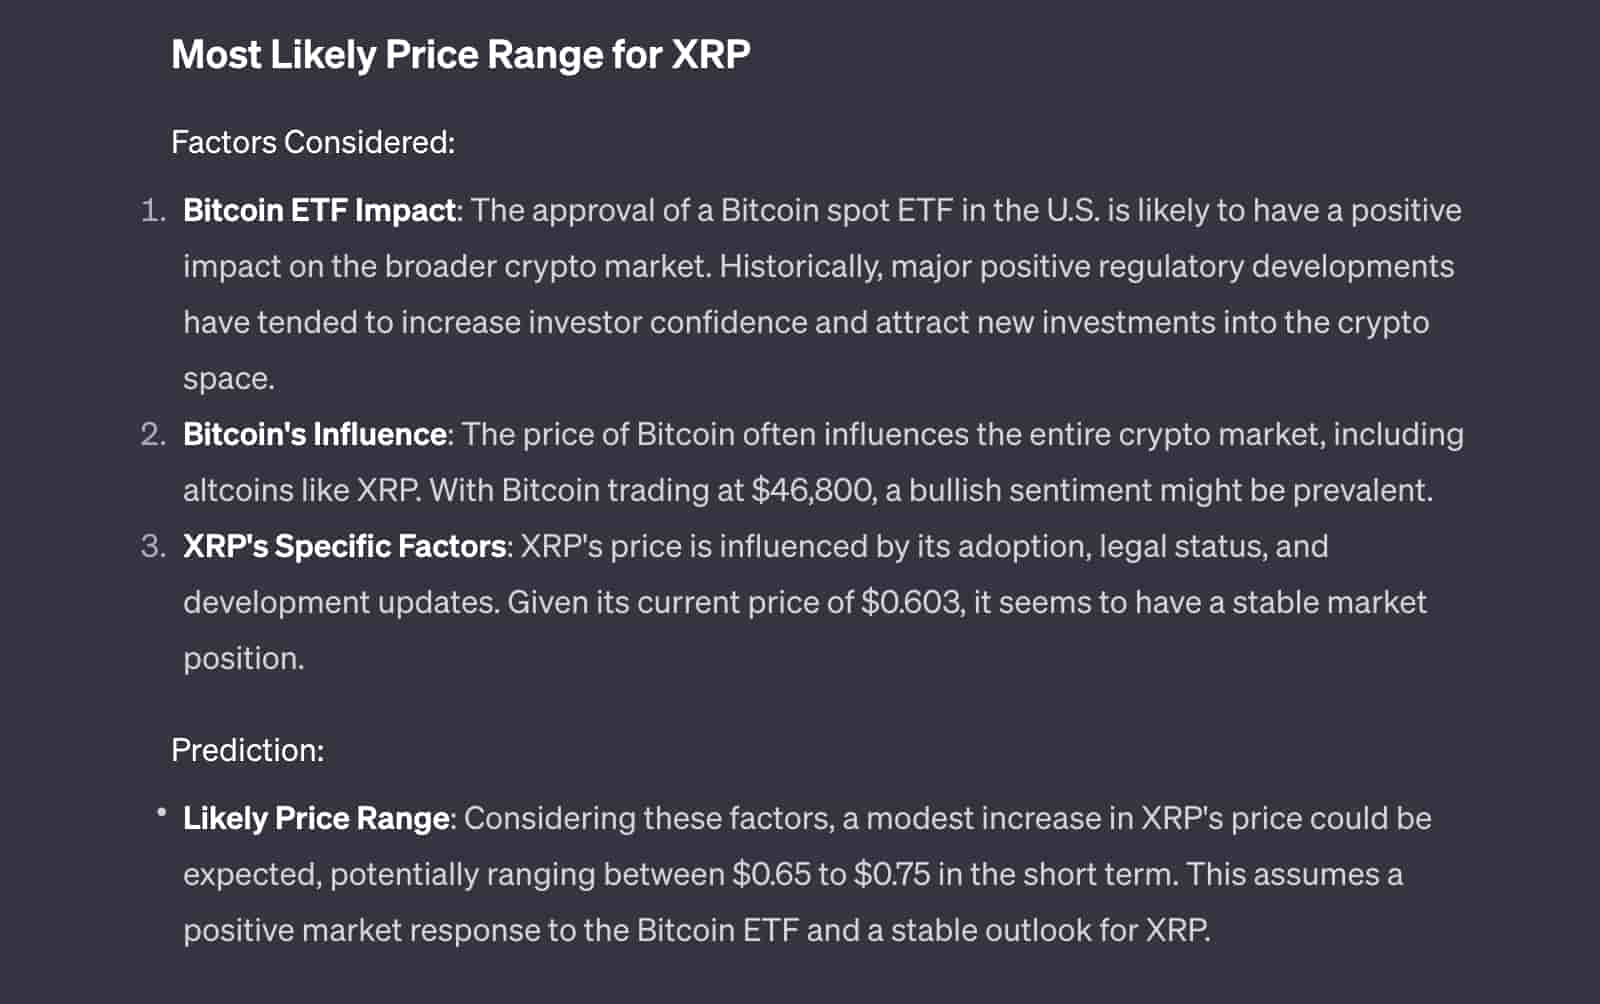 ChatGPT прогнозирует цену XRP после одобрения Bitcoin ETF